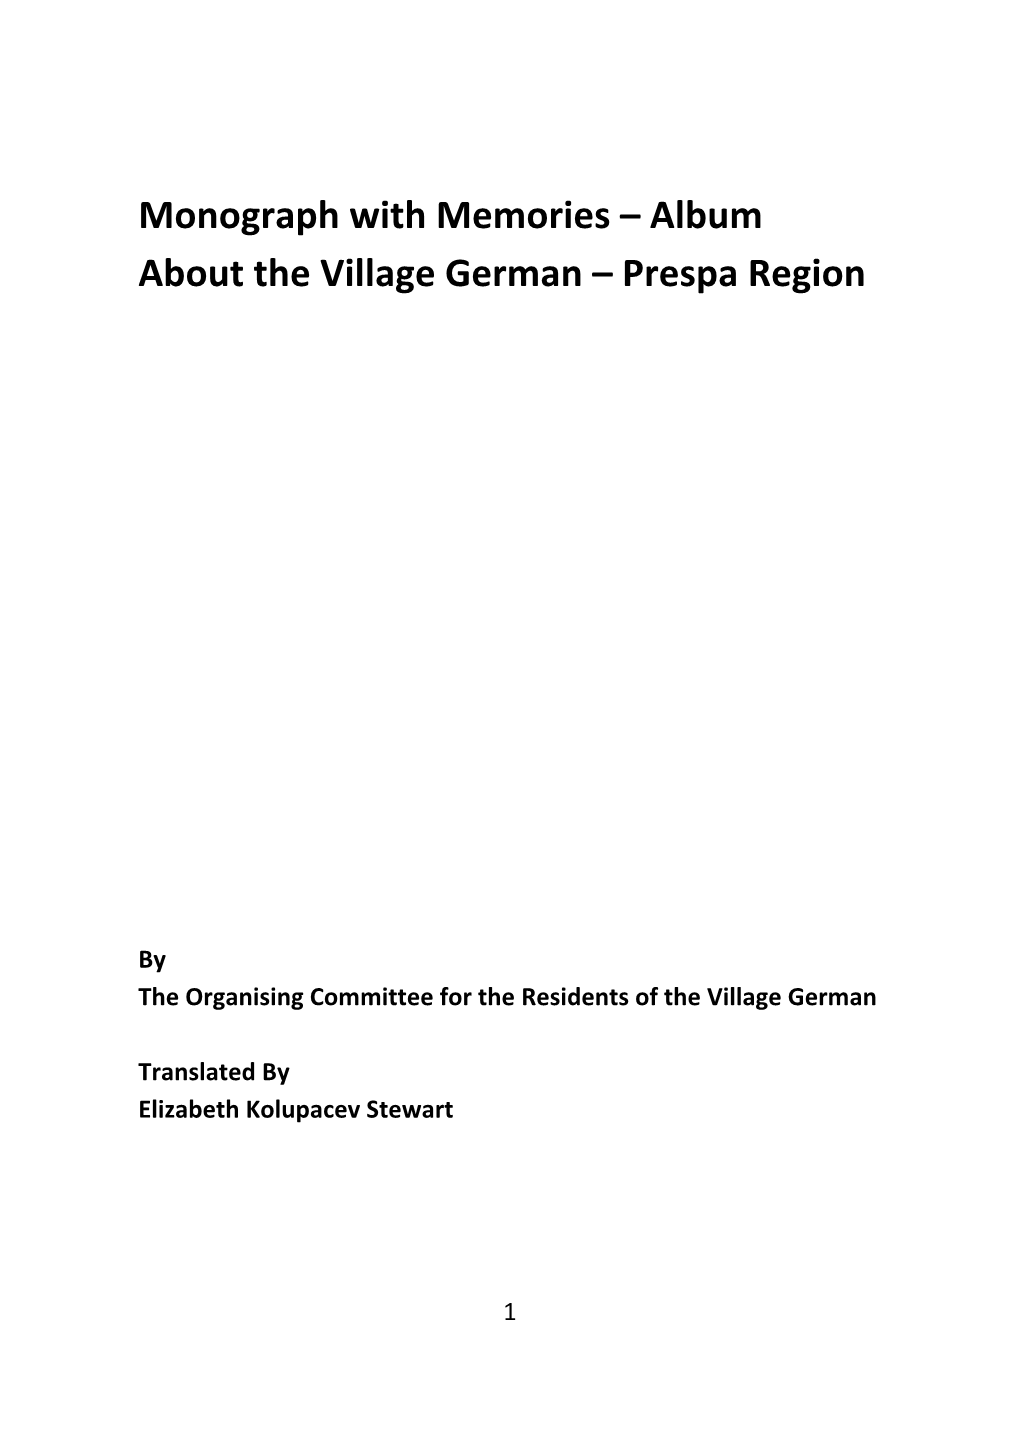 Monograph with Memories – Album About the Village German – Prespa Region